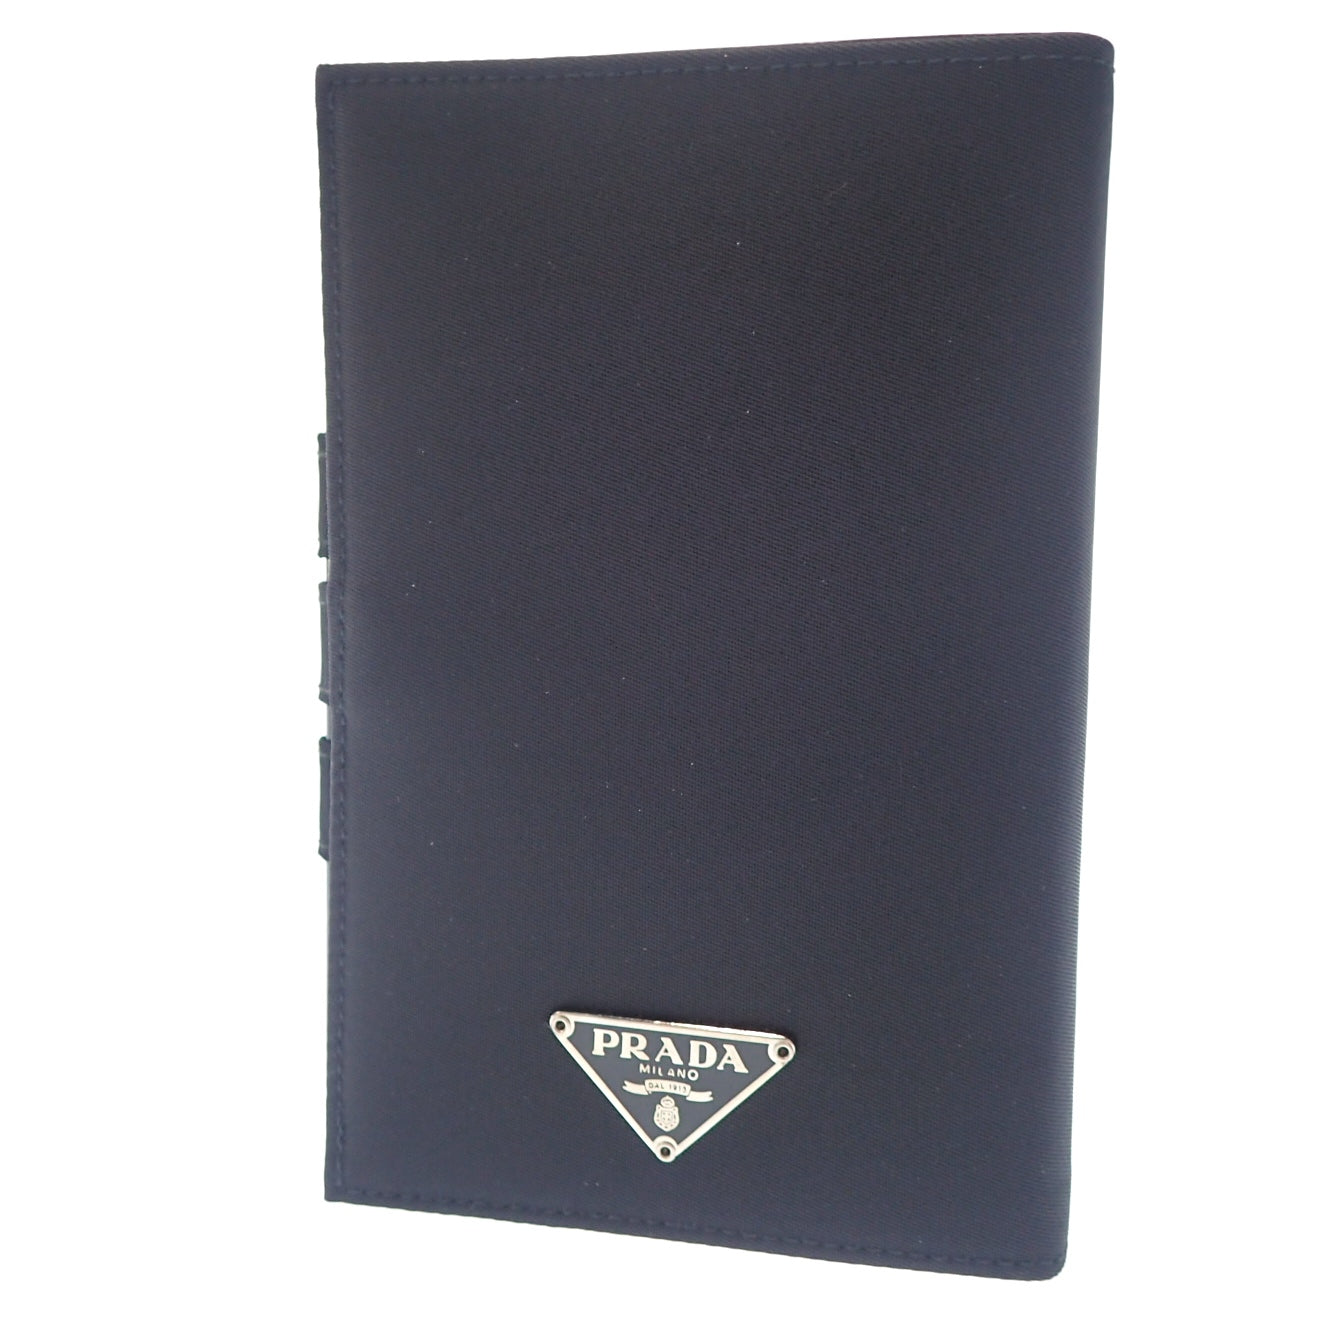 Prada address book triangular plate nylon black with box PRADA [AFI18] [Used] 